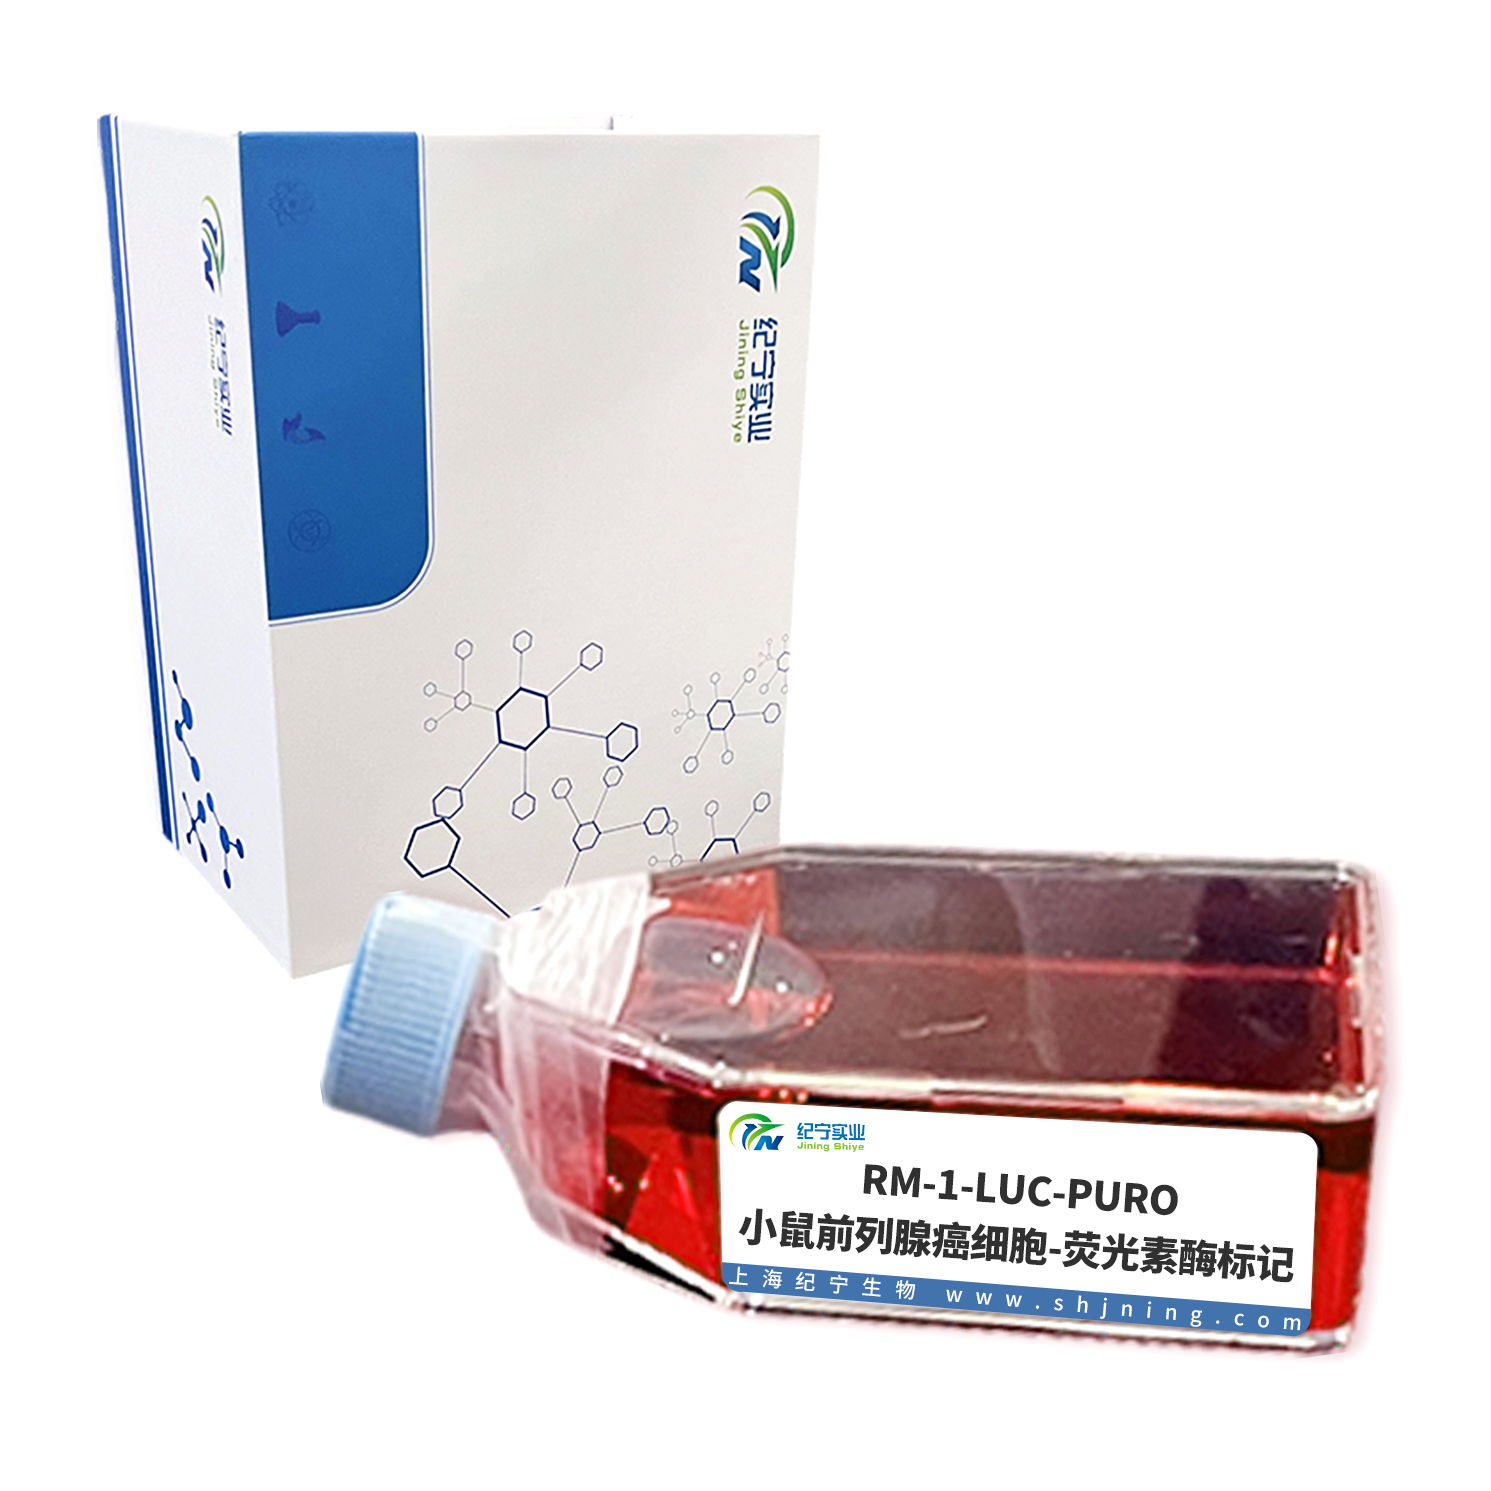 RM-1-LUC-PURO/小鼠前列腺癌细胞-荧光素酶标记